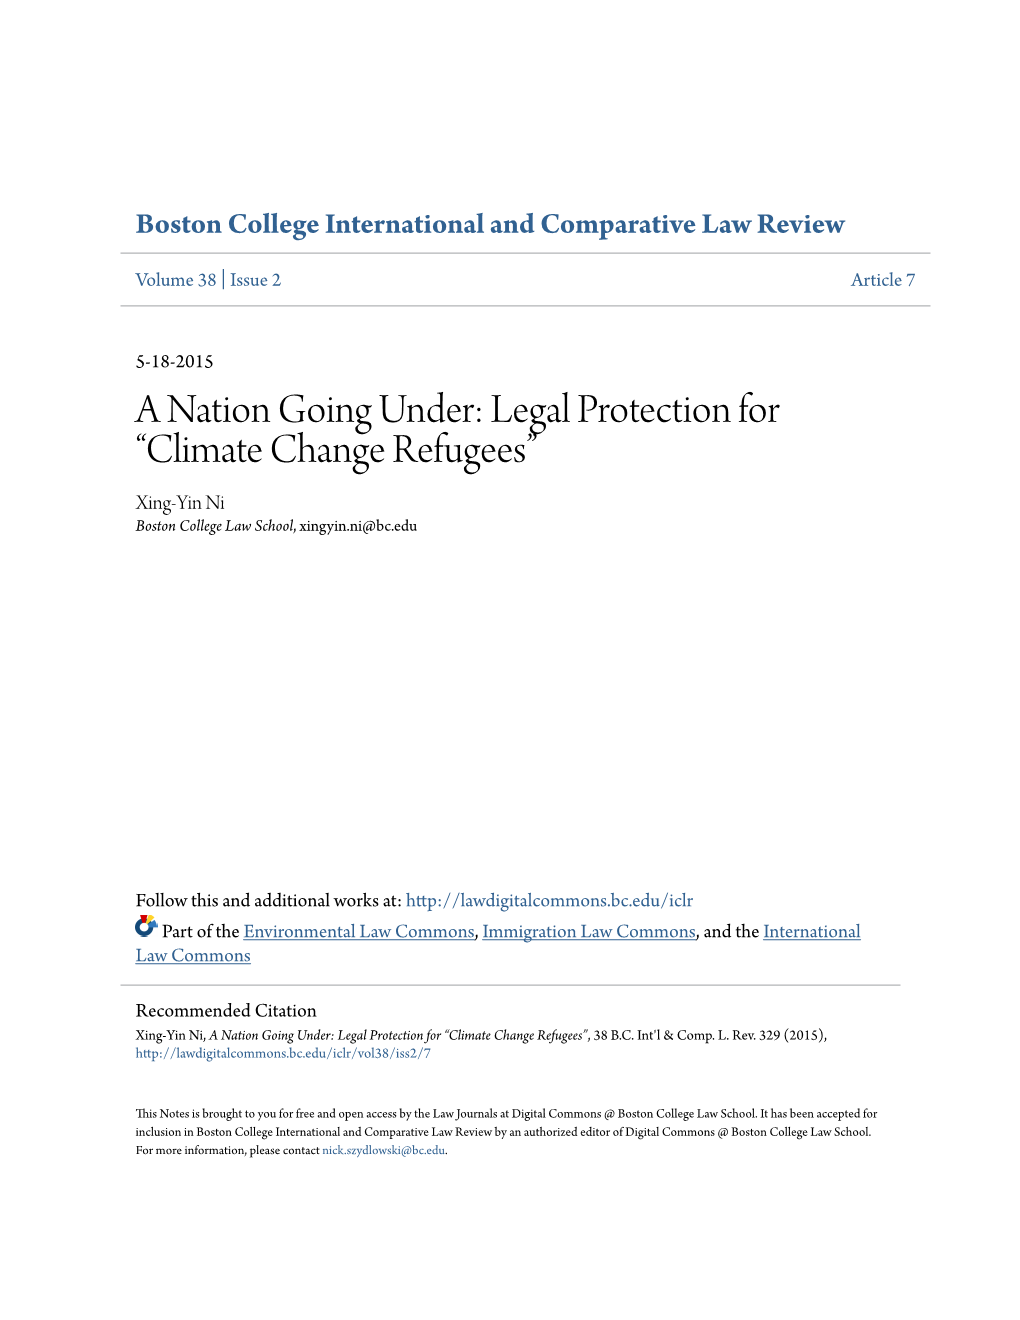 Climate Change Refugees” Xing-Yin Ni Boston College Law School, Xingyin.Ni@Bc.Edu